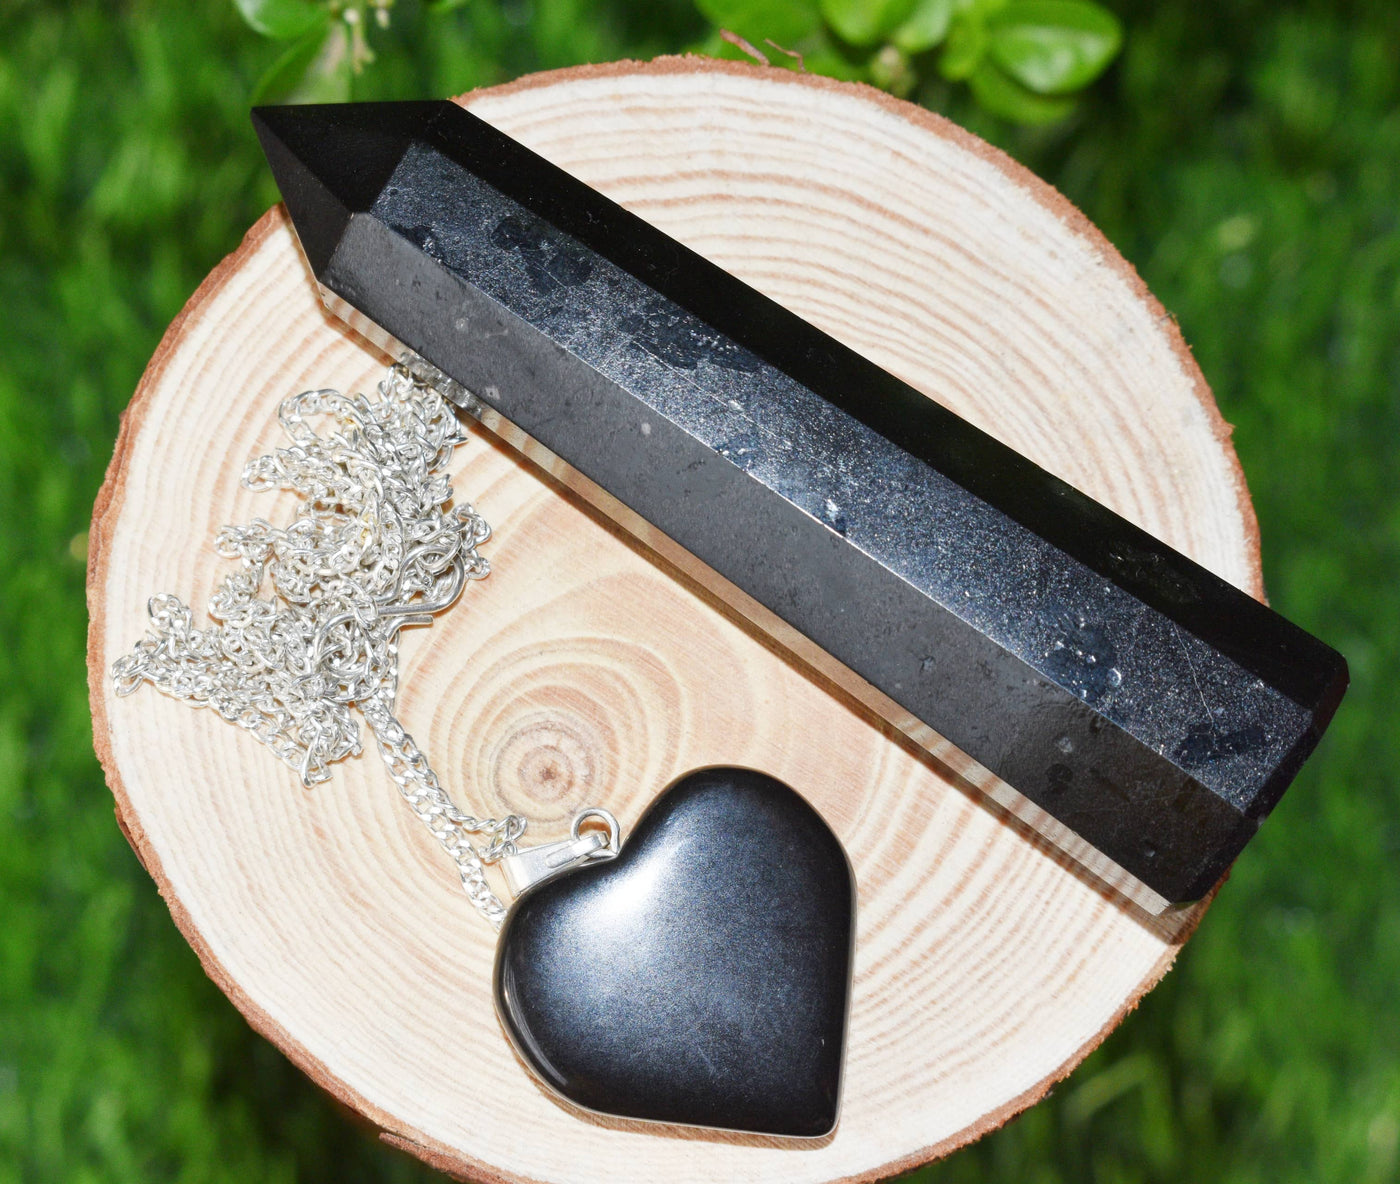 Black Tourmaline Crystal Gift Set For Emotional Support and Protection, Real Polished Gemstones.